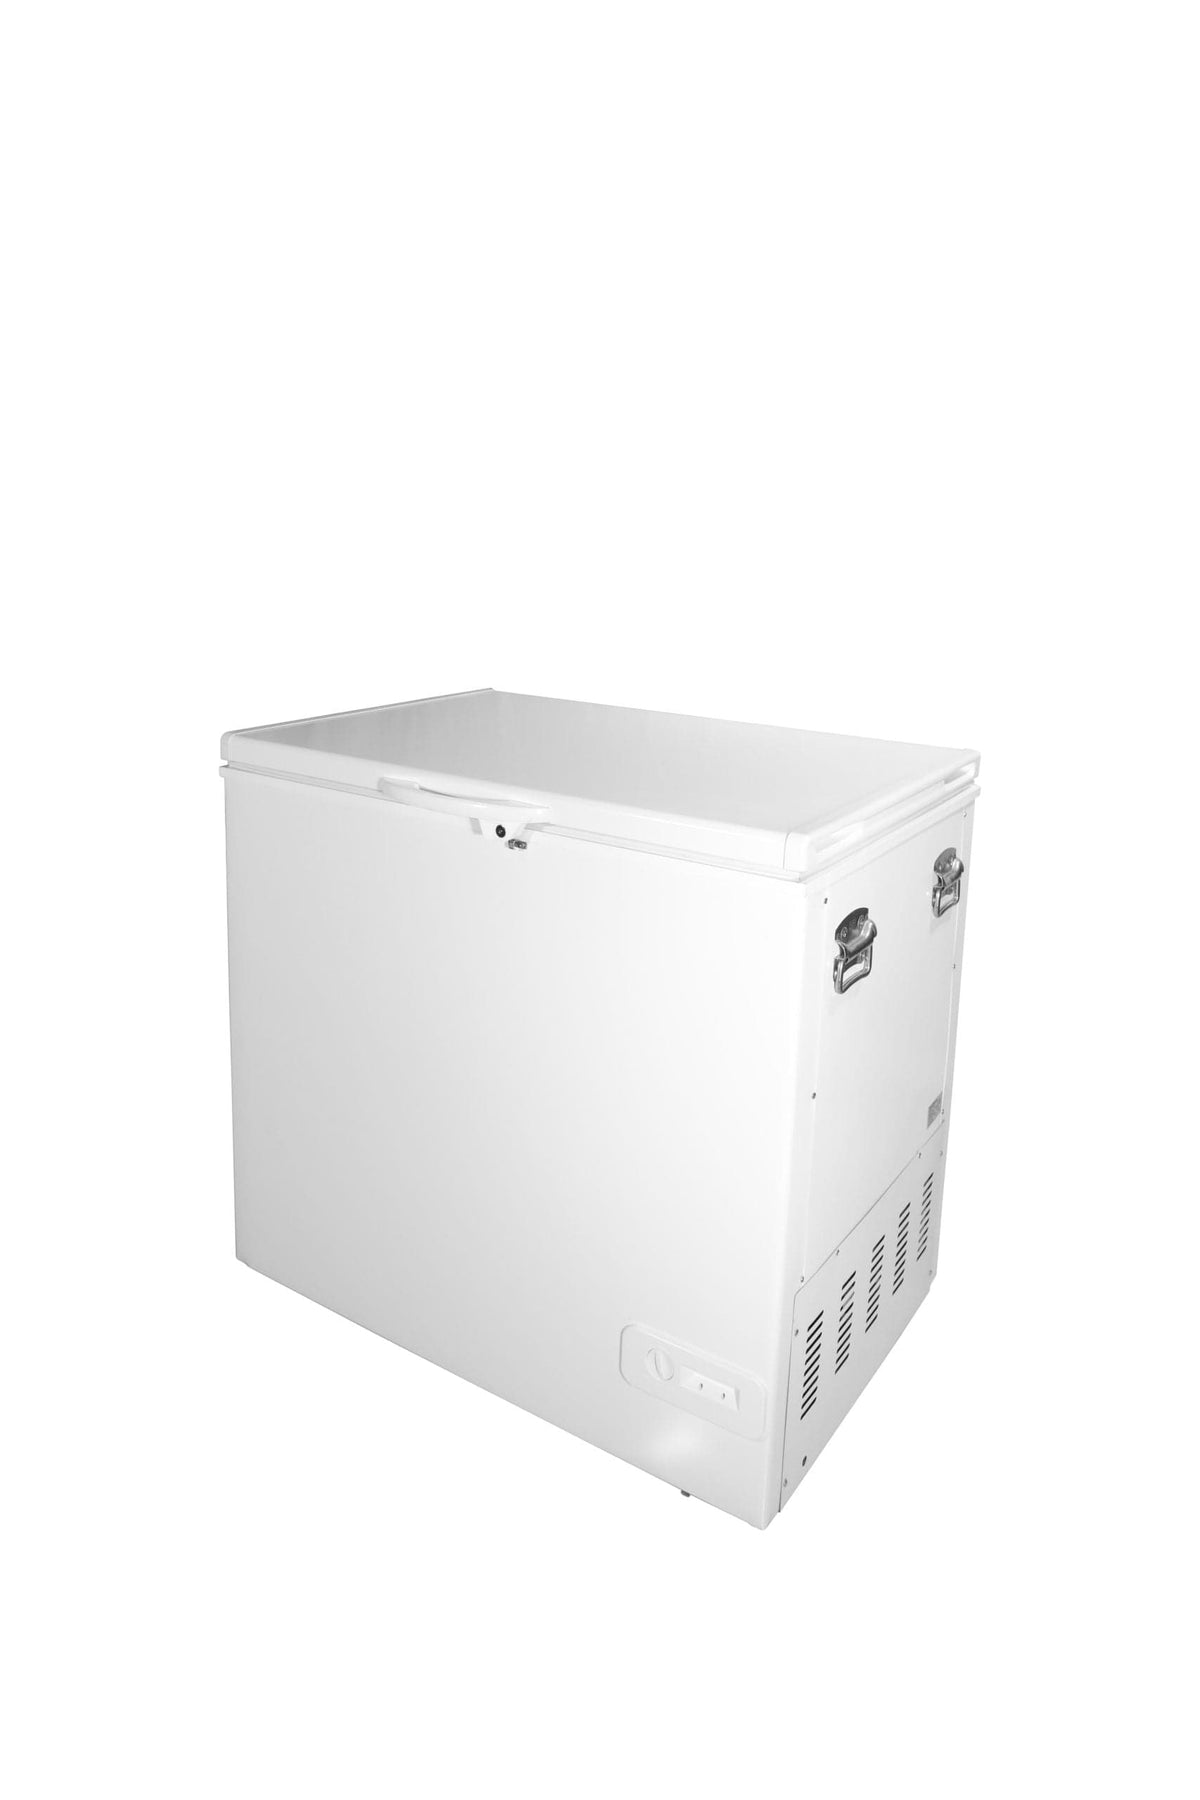 Sundanzer Solar Appliances Sundanzer DCF160 5.6 cu ft. Solar/Battery 12v/24v Powered All Freezer 5.6 cu ft.